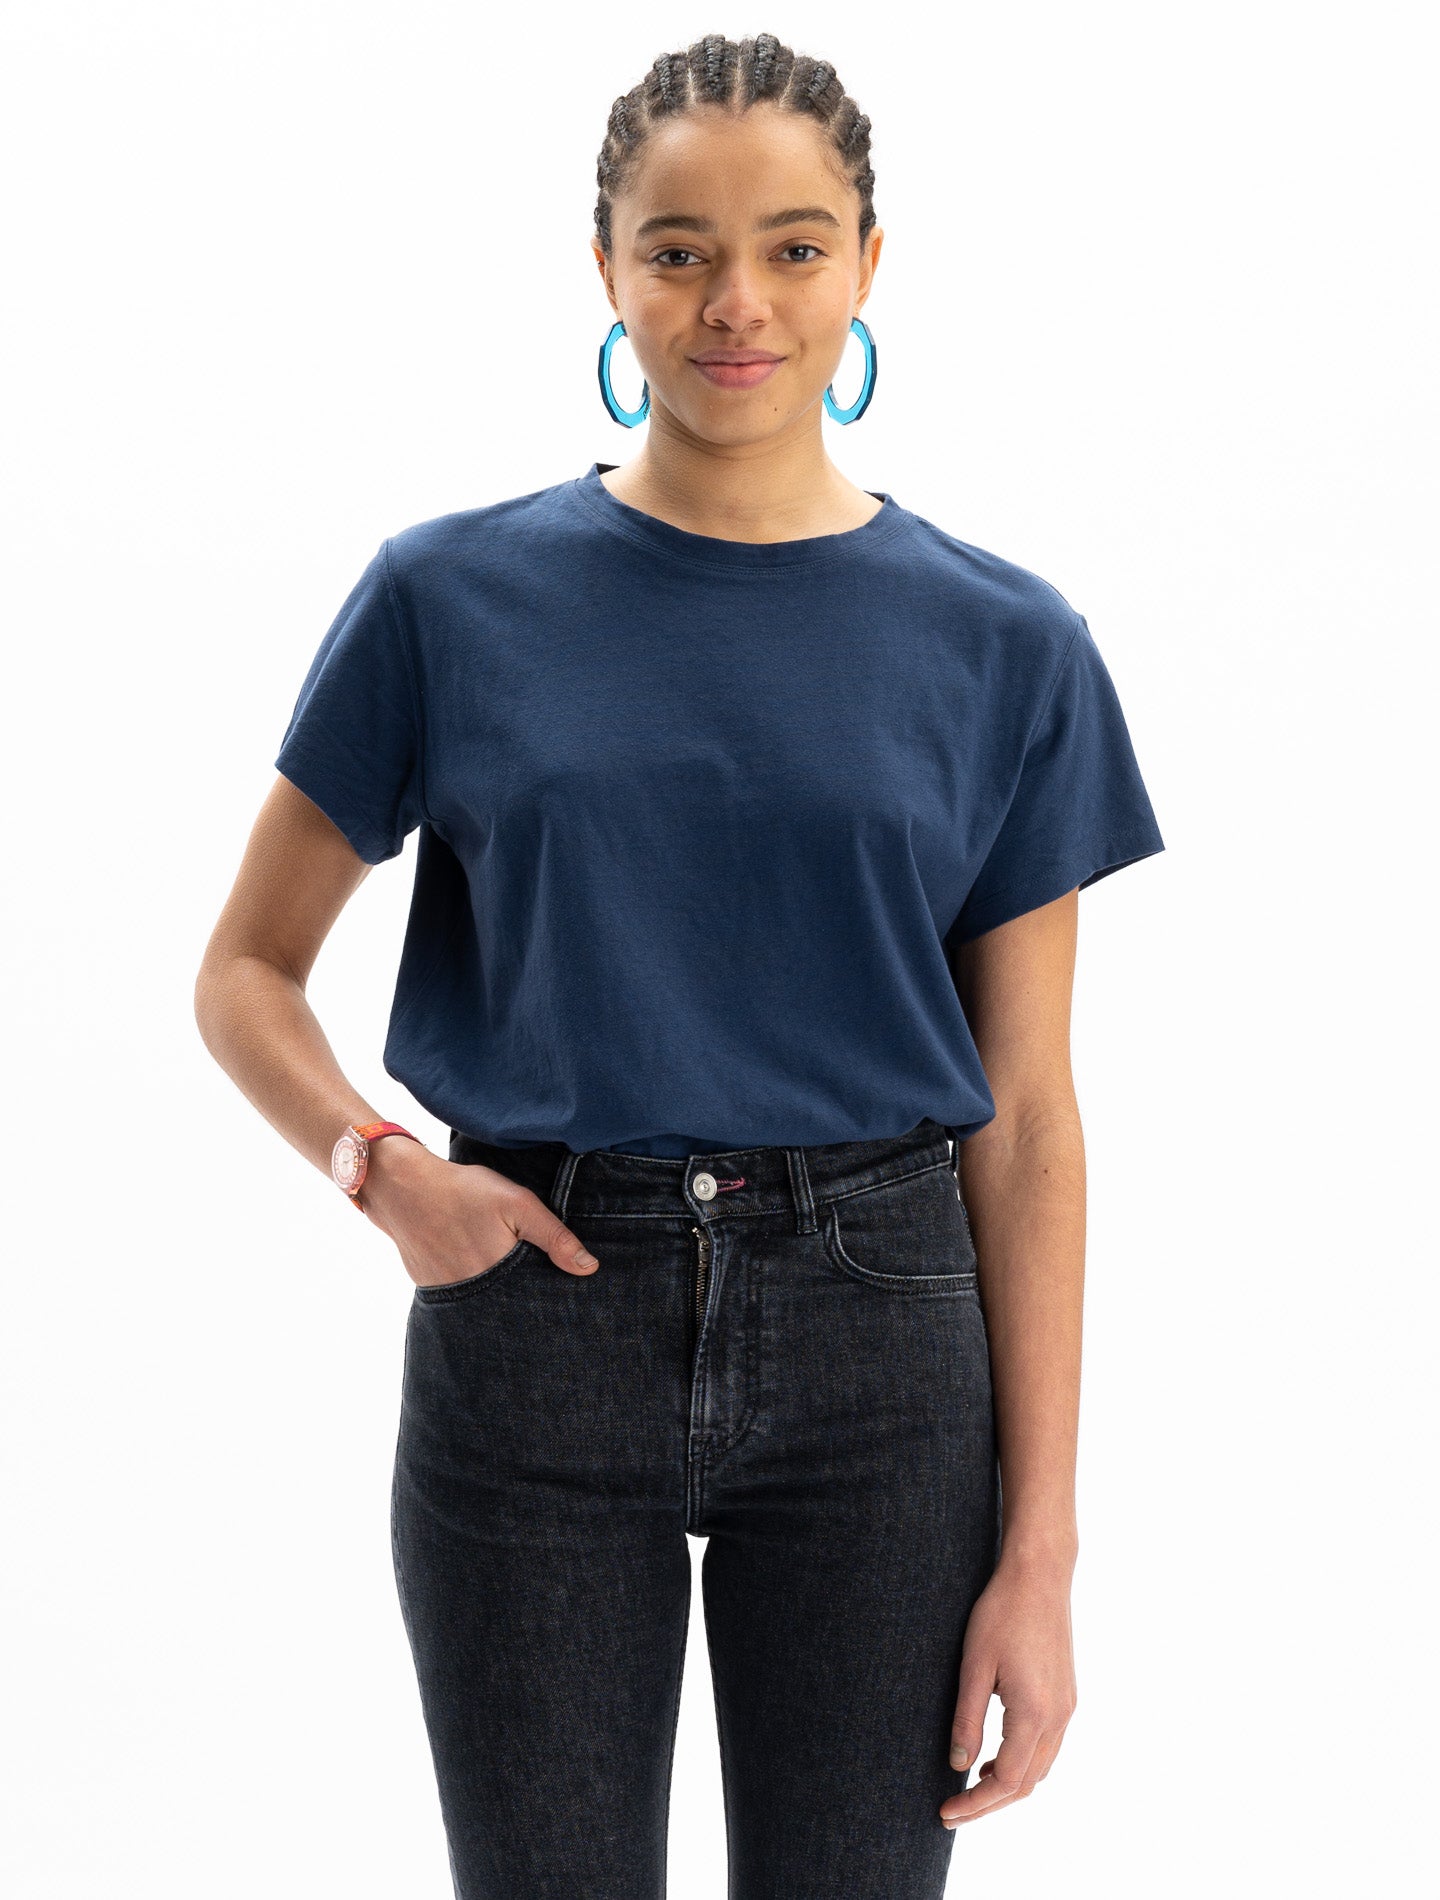 Le tee-shirt Iconic Willie® jersey bio-recyclé Bleu navy